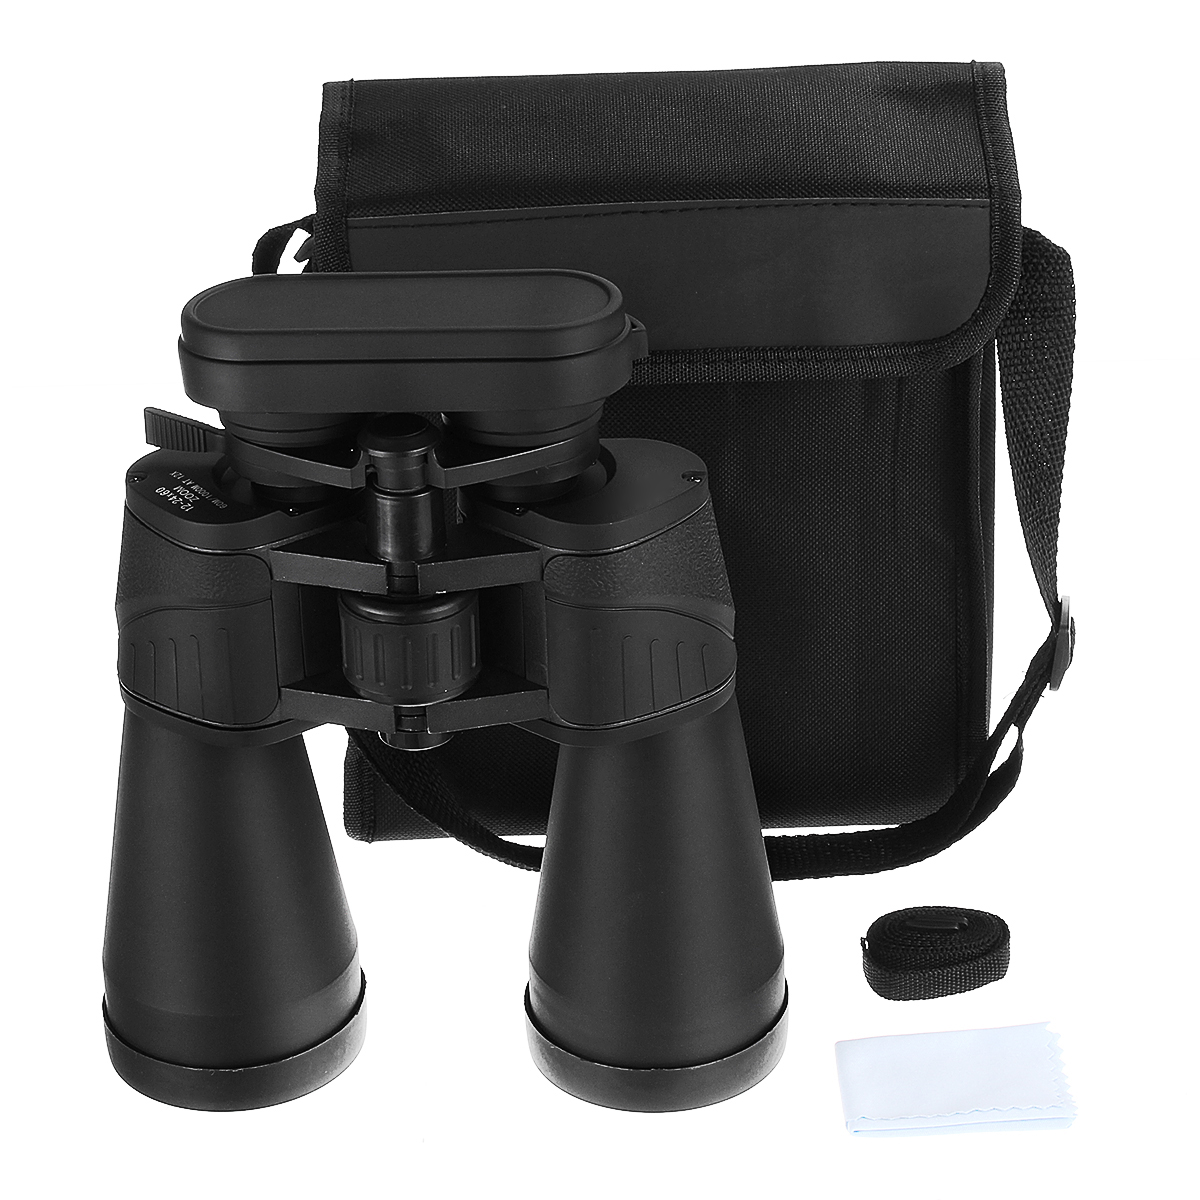 12-24X60-Outdoor-Tactical-Zoom-Binocular-Waterproof-HD-Optic-Night-Vision-Telescope-Camping-Hiking-1339407